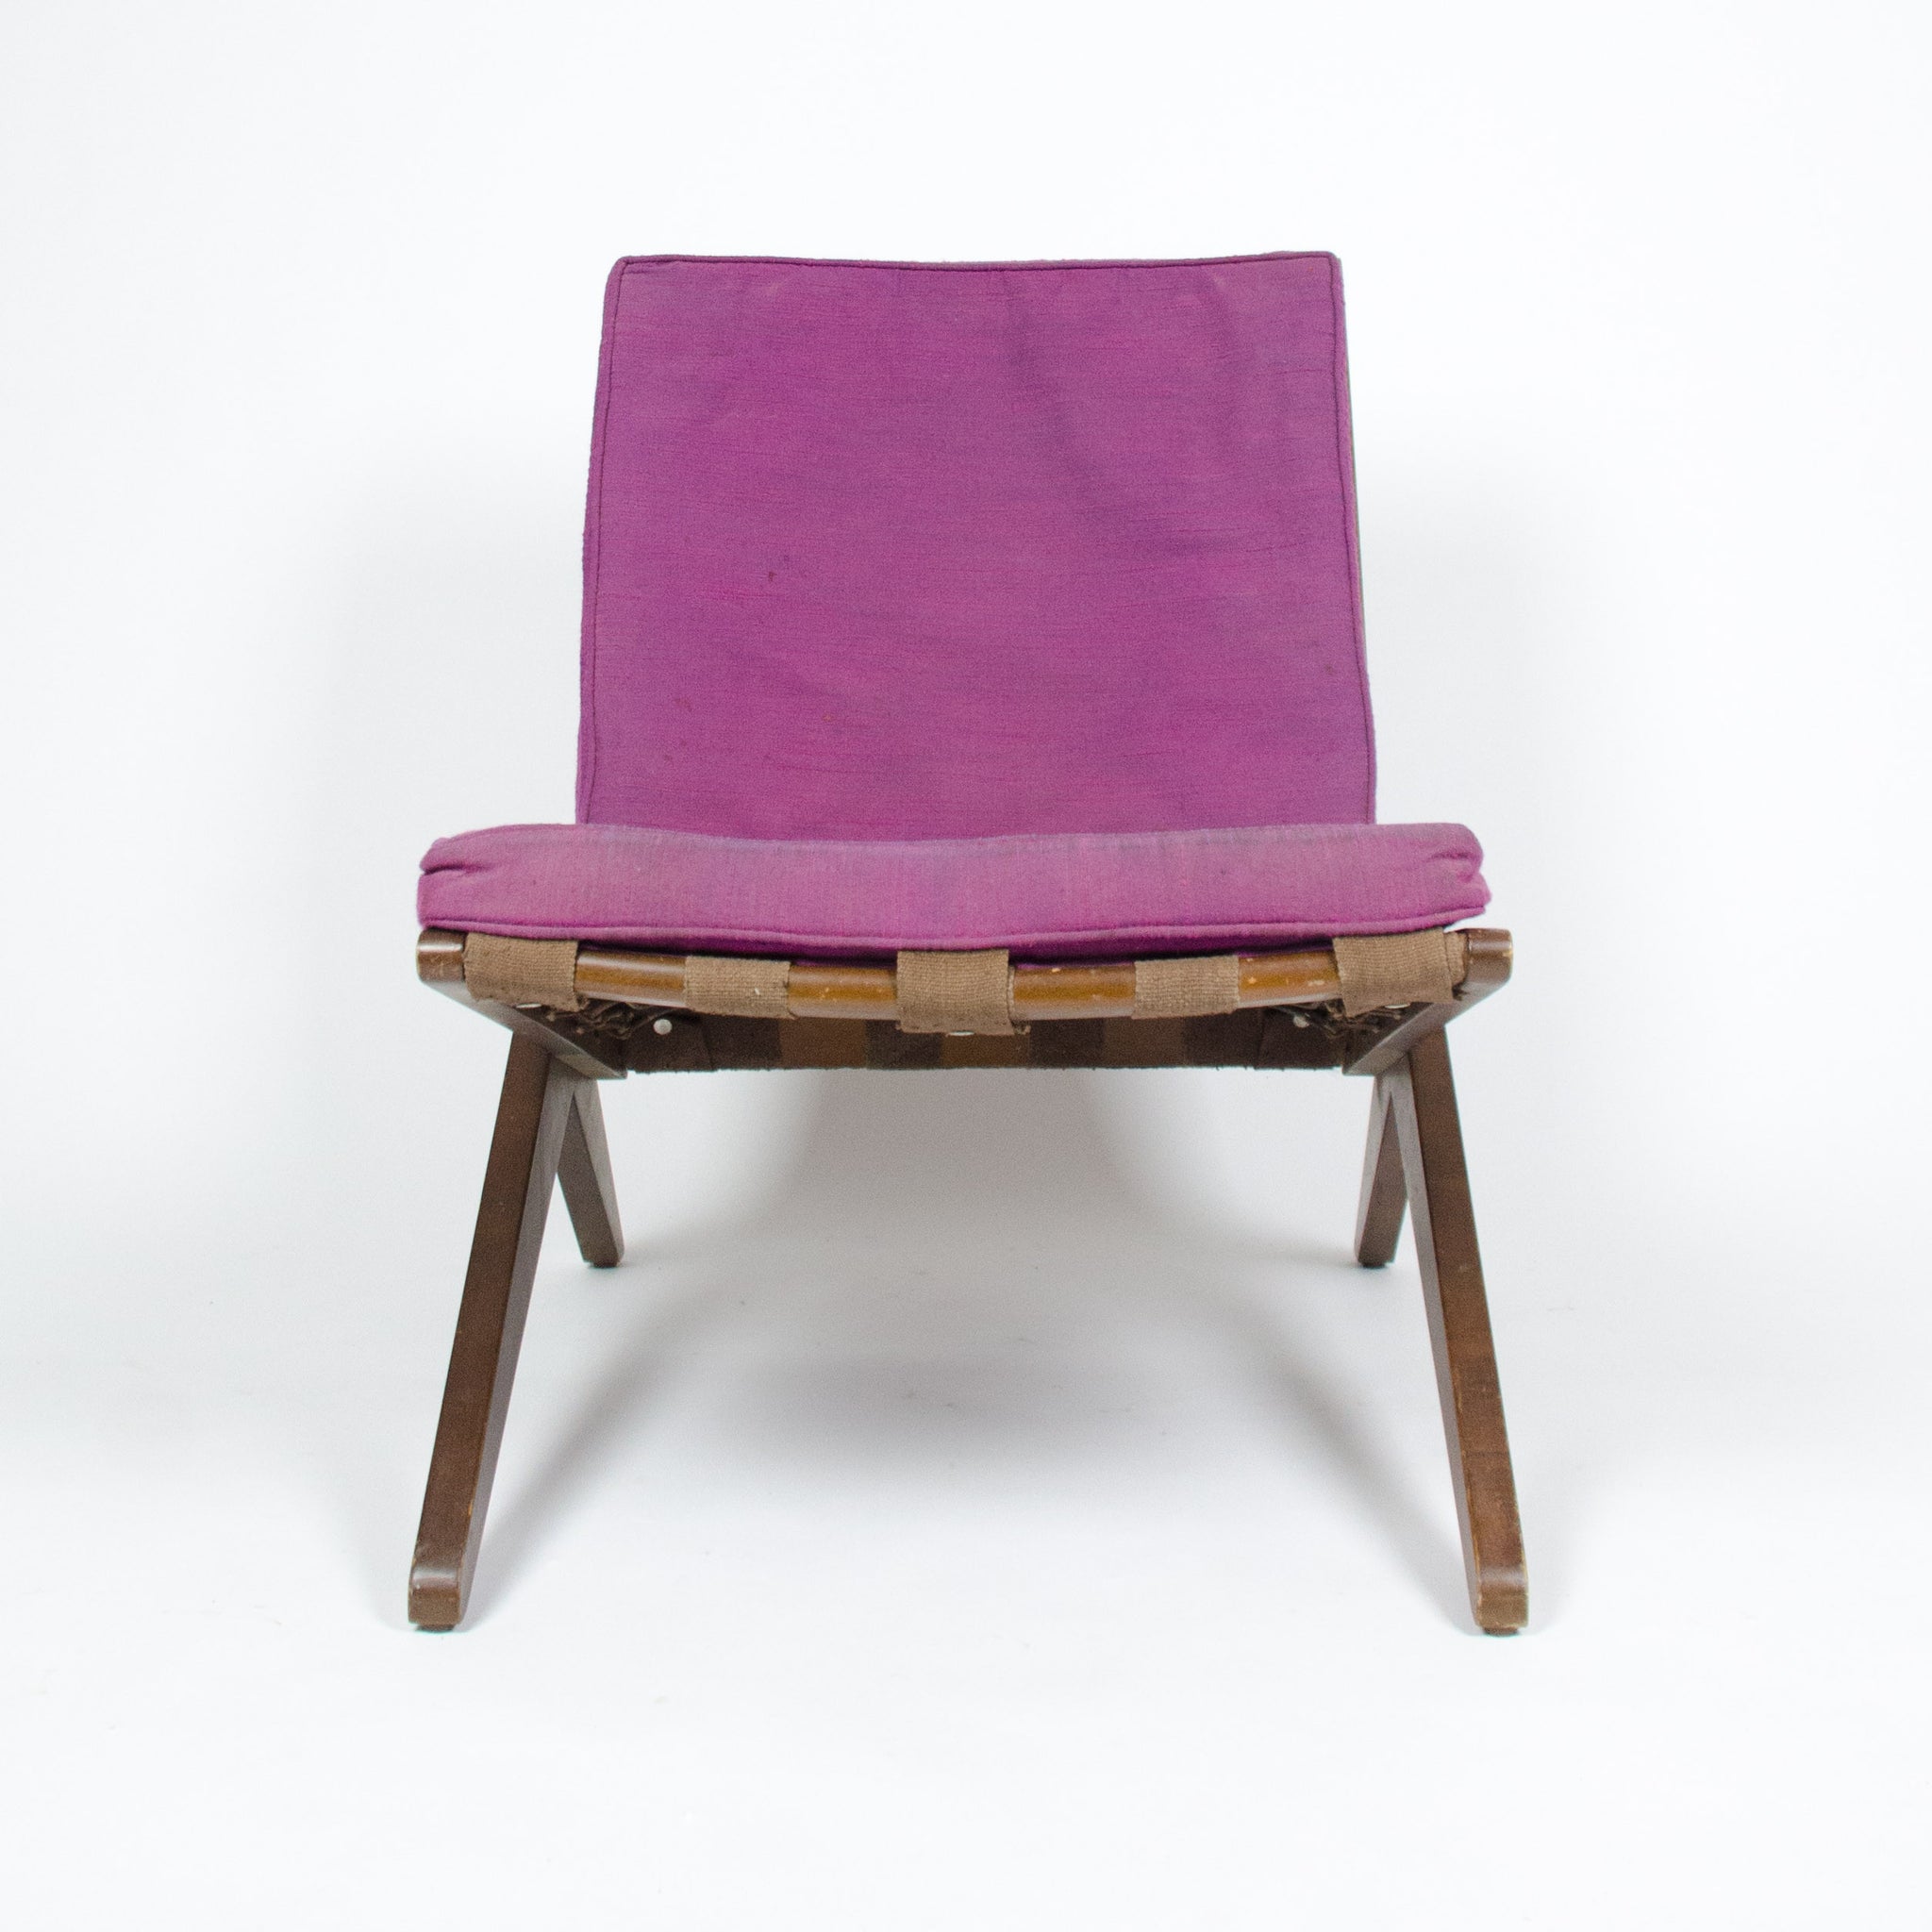 SOLD All Original Vintage Knoll Pierre Jeanneret No. 92 Scissor Lounge Chairs